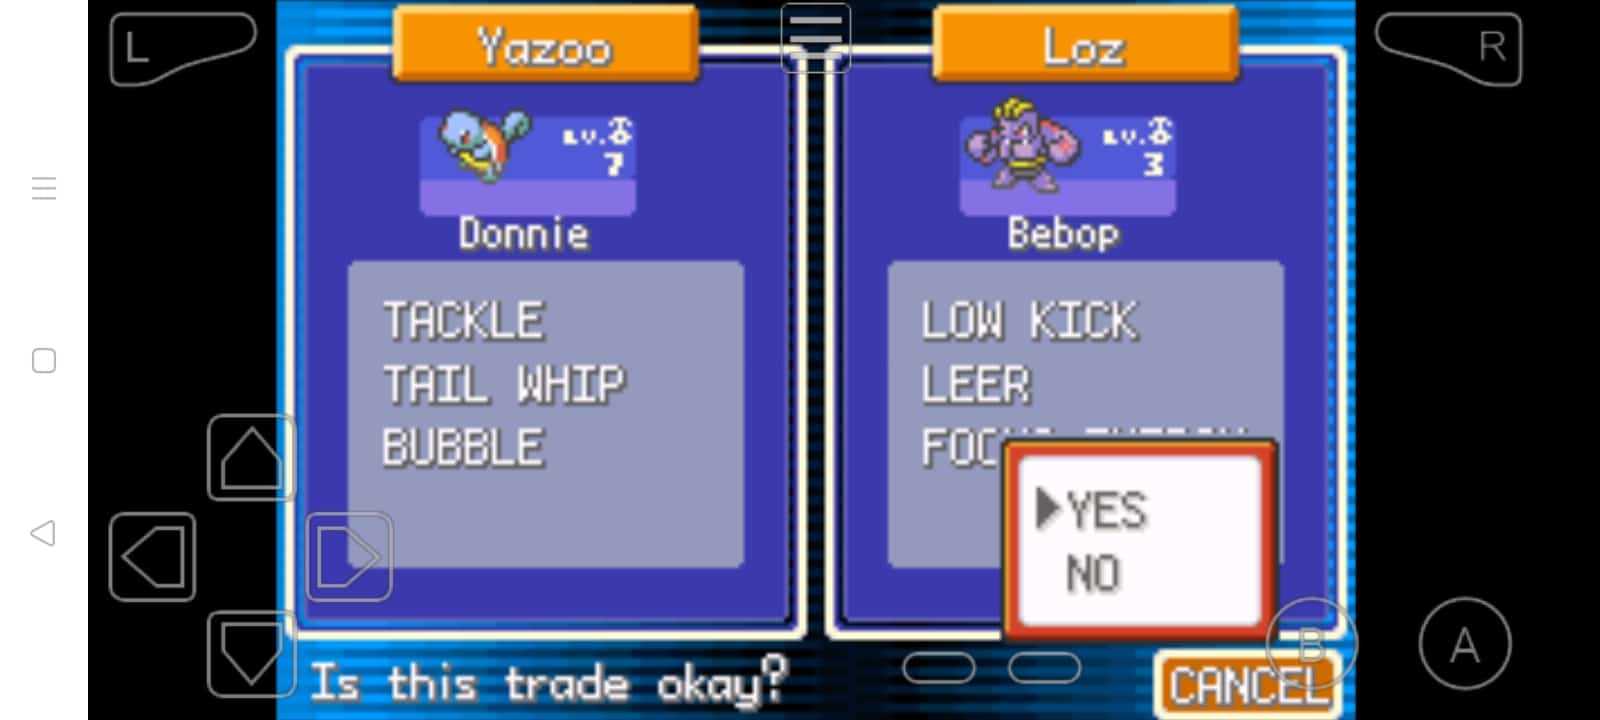 How to trade Pokemon, My Boy! Tutorial